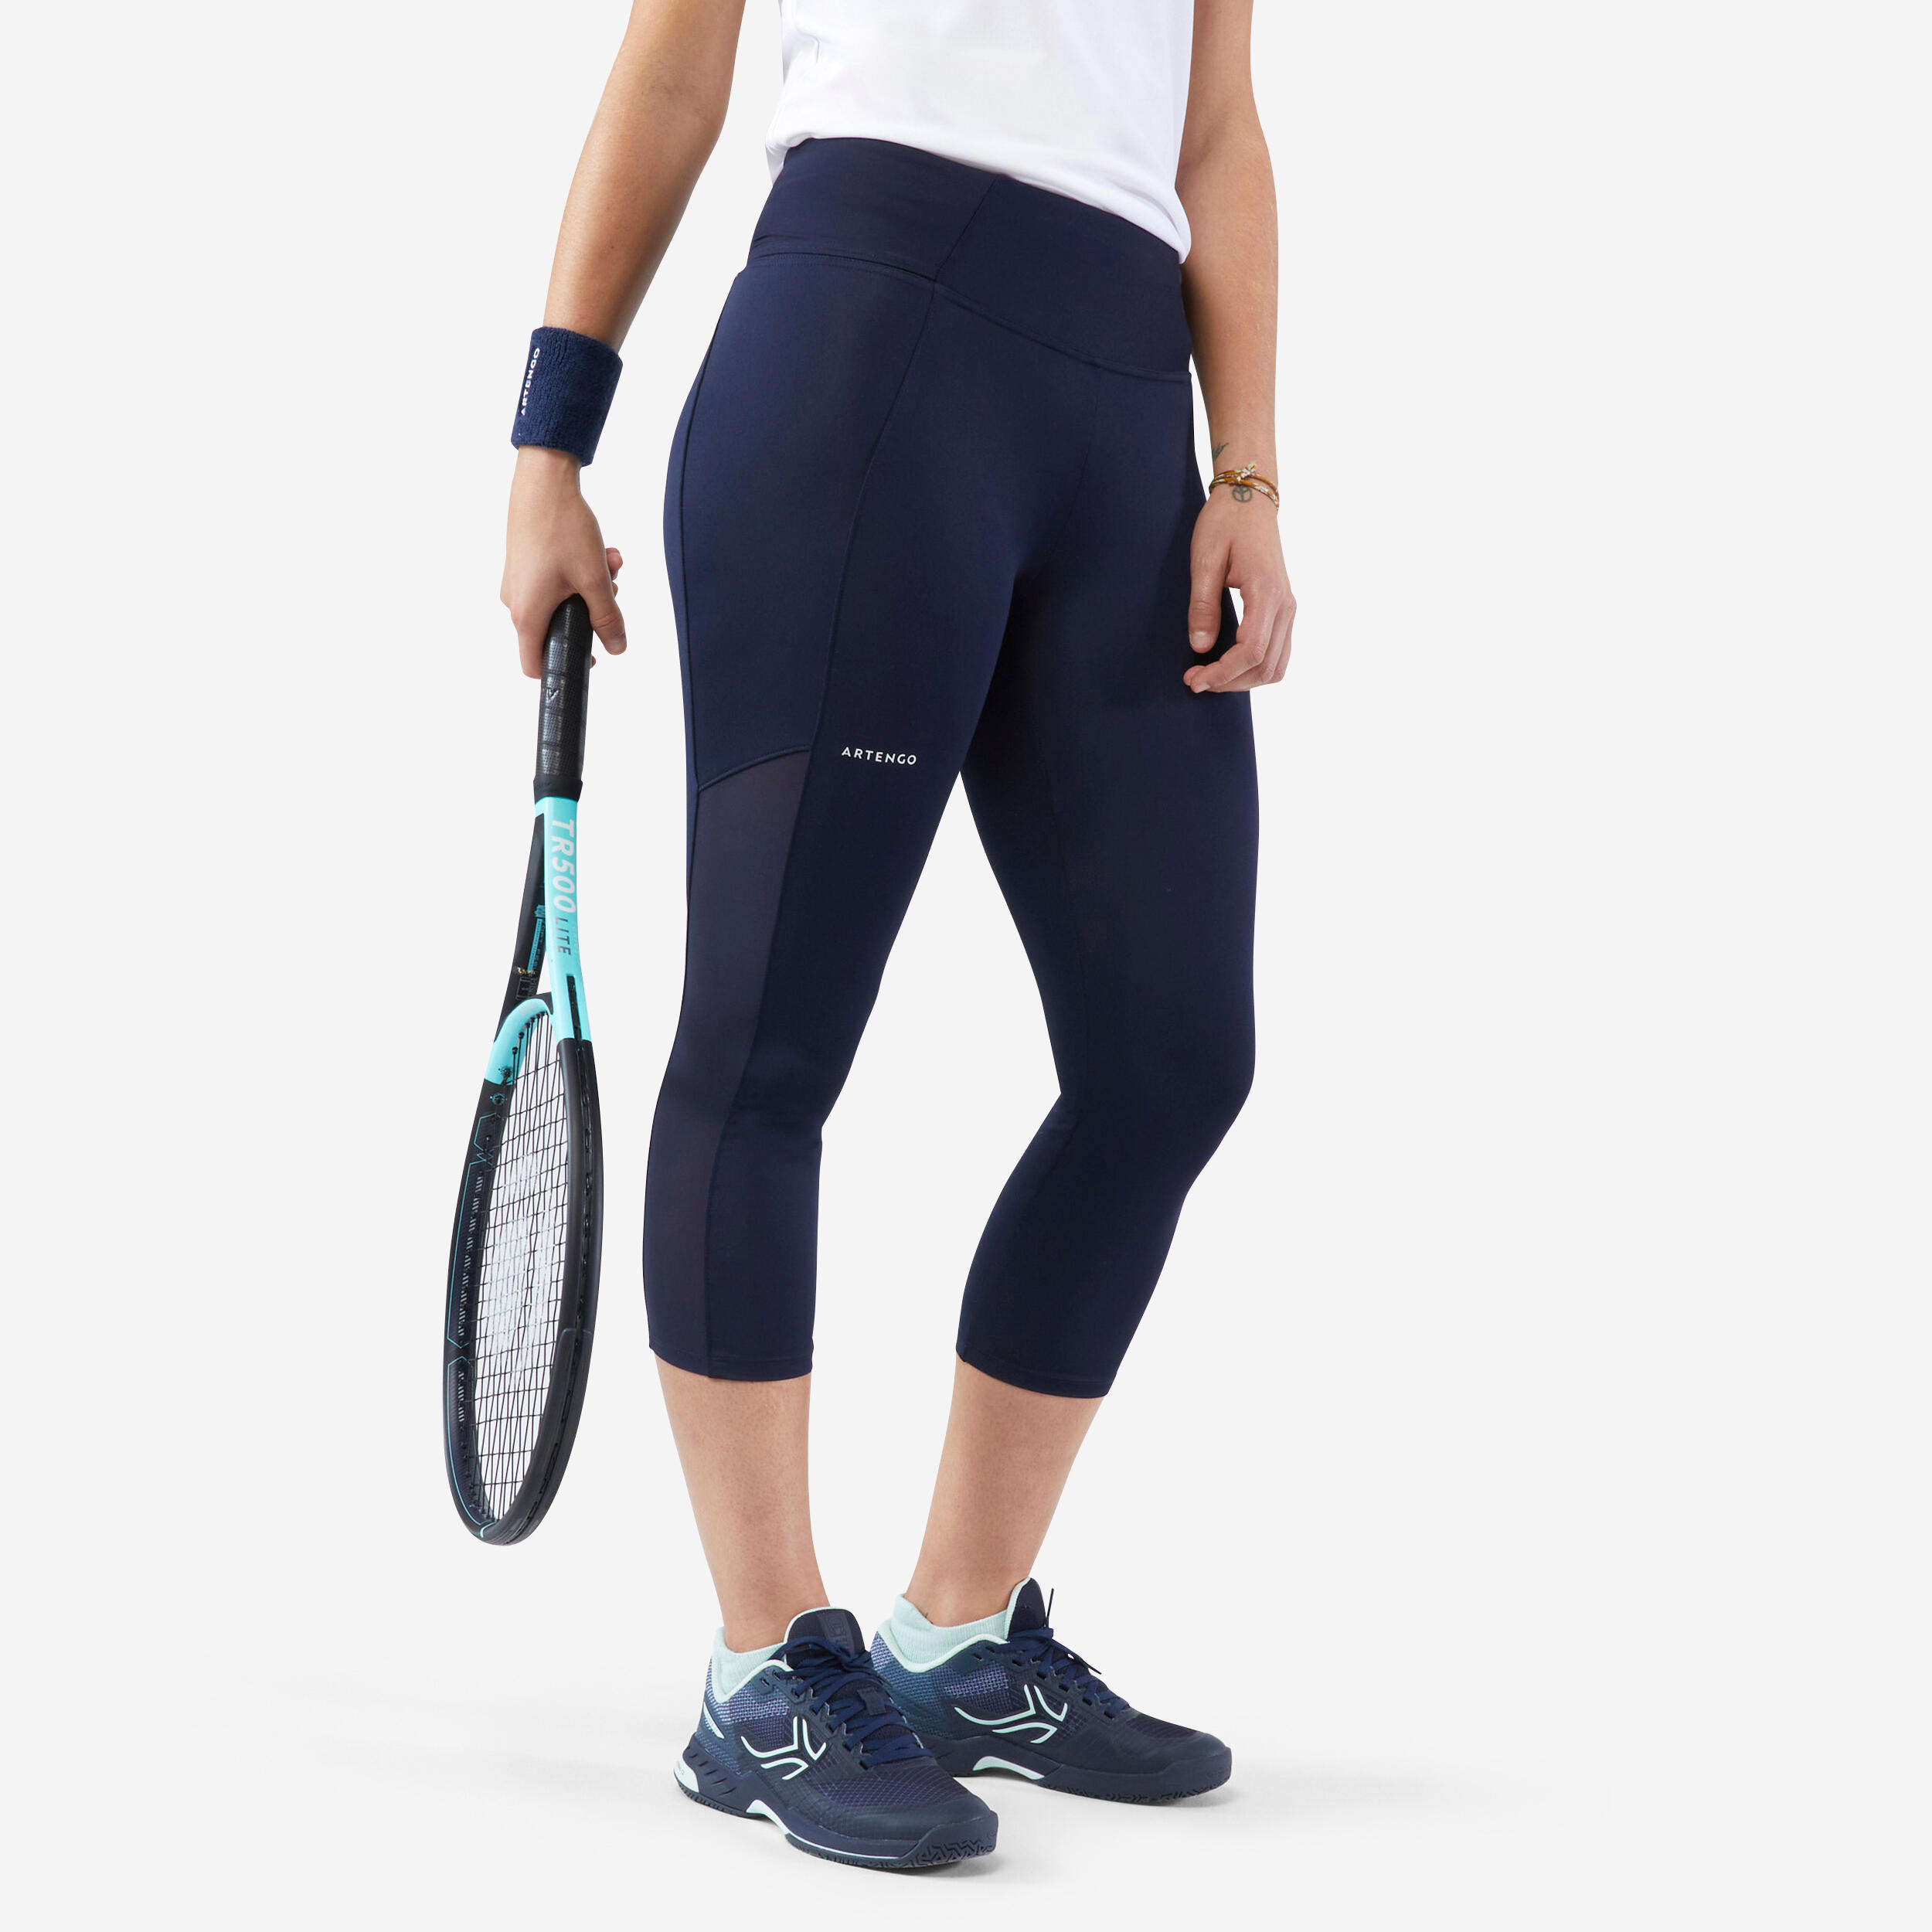 legging tennis court dry femme - corsaire dry hip ball noir - artengo